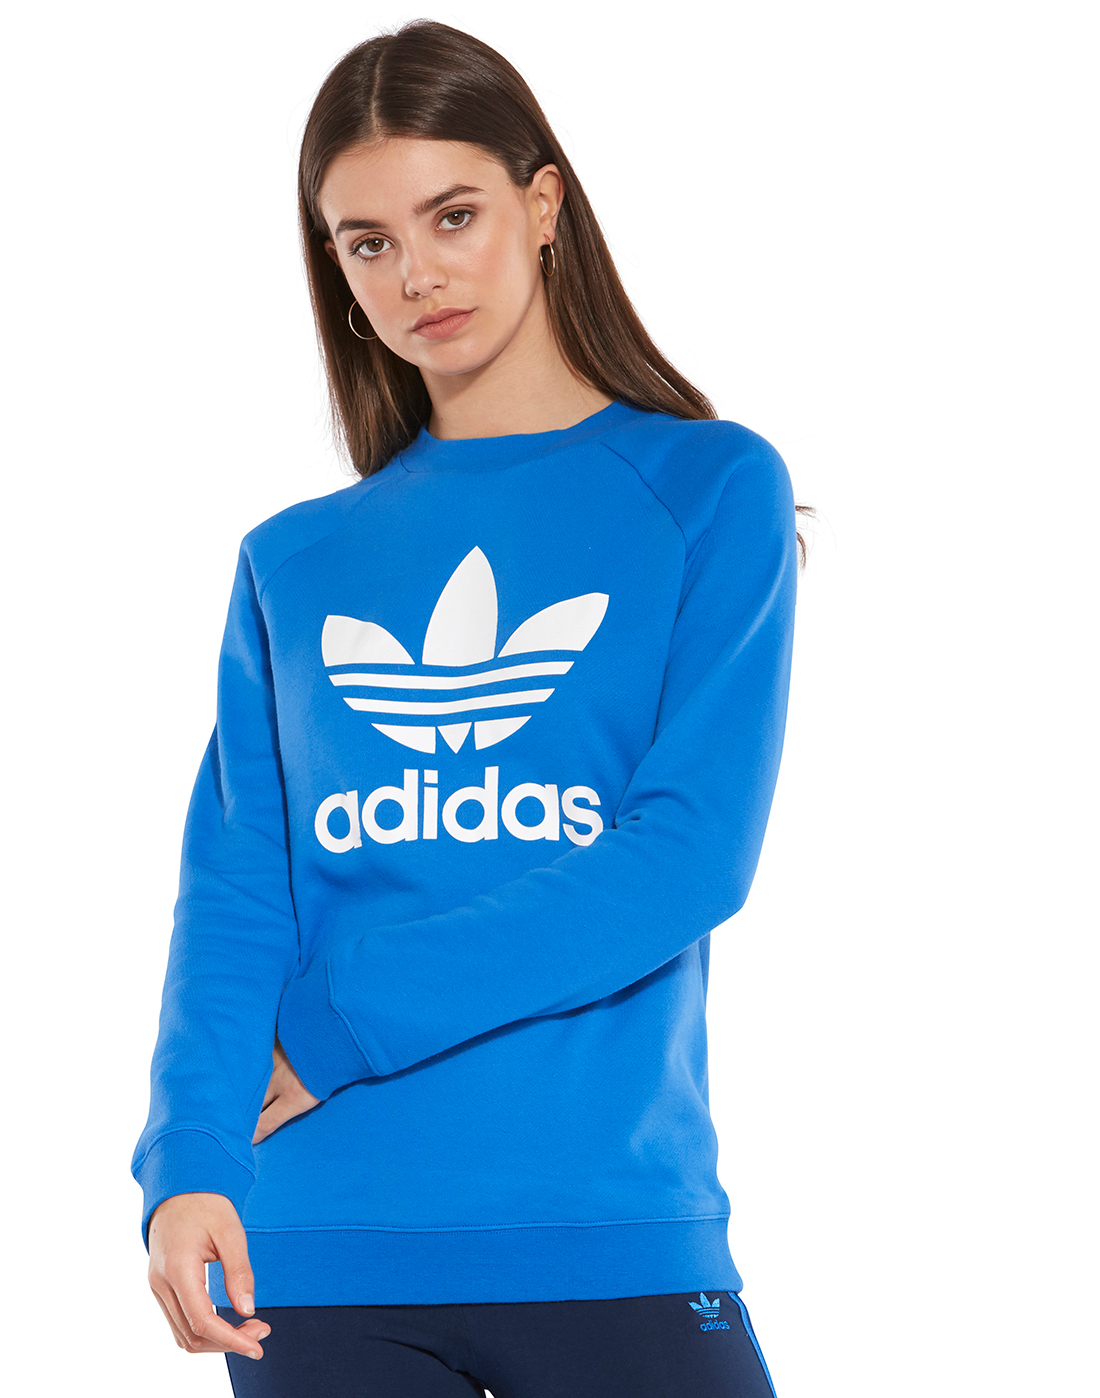 adidas blue sweatshirt womens